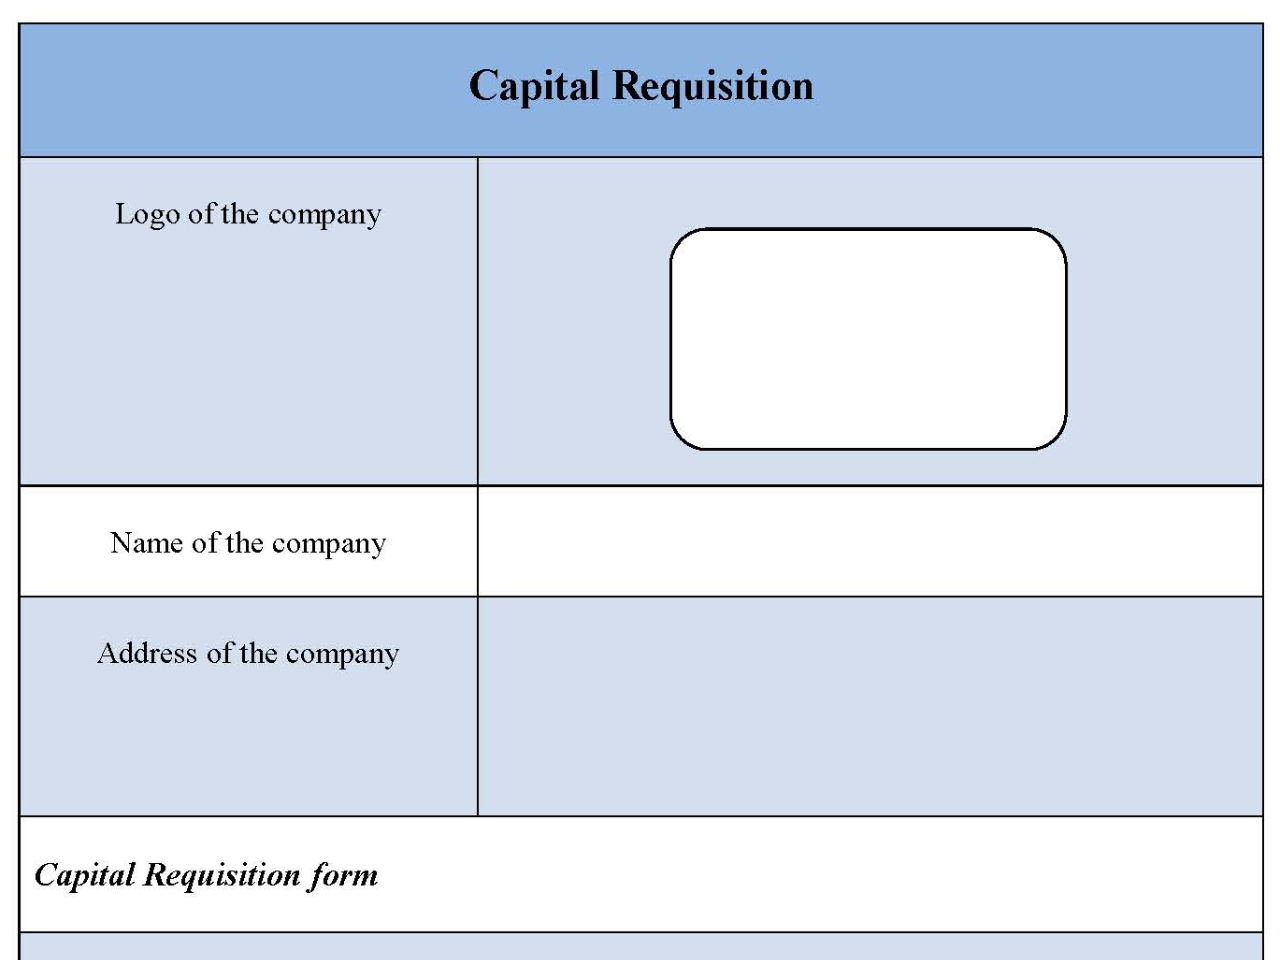 Capital Requisition Form